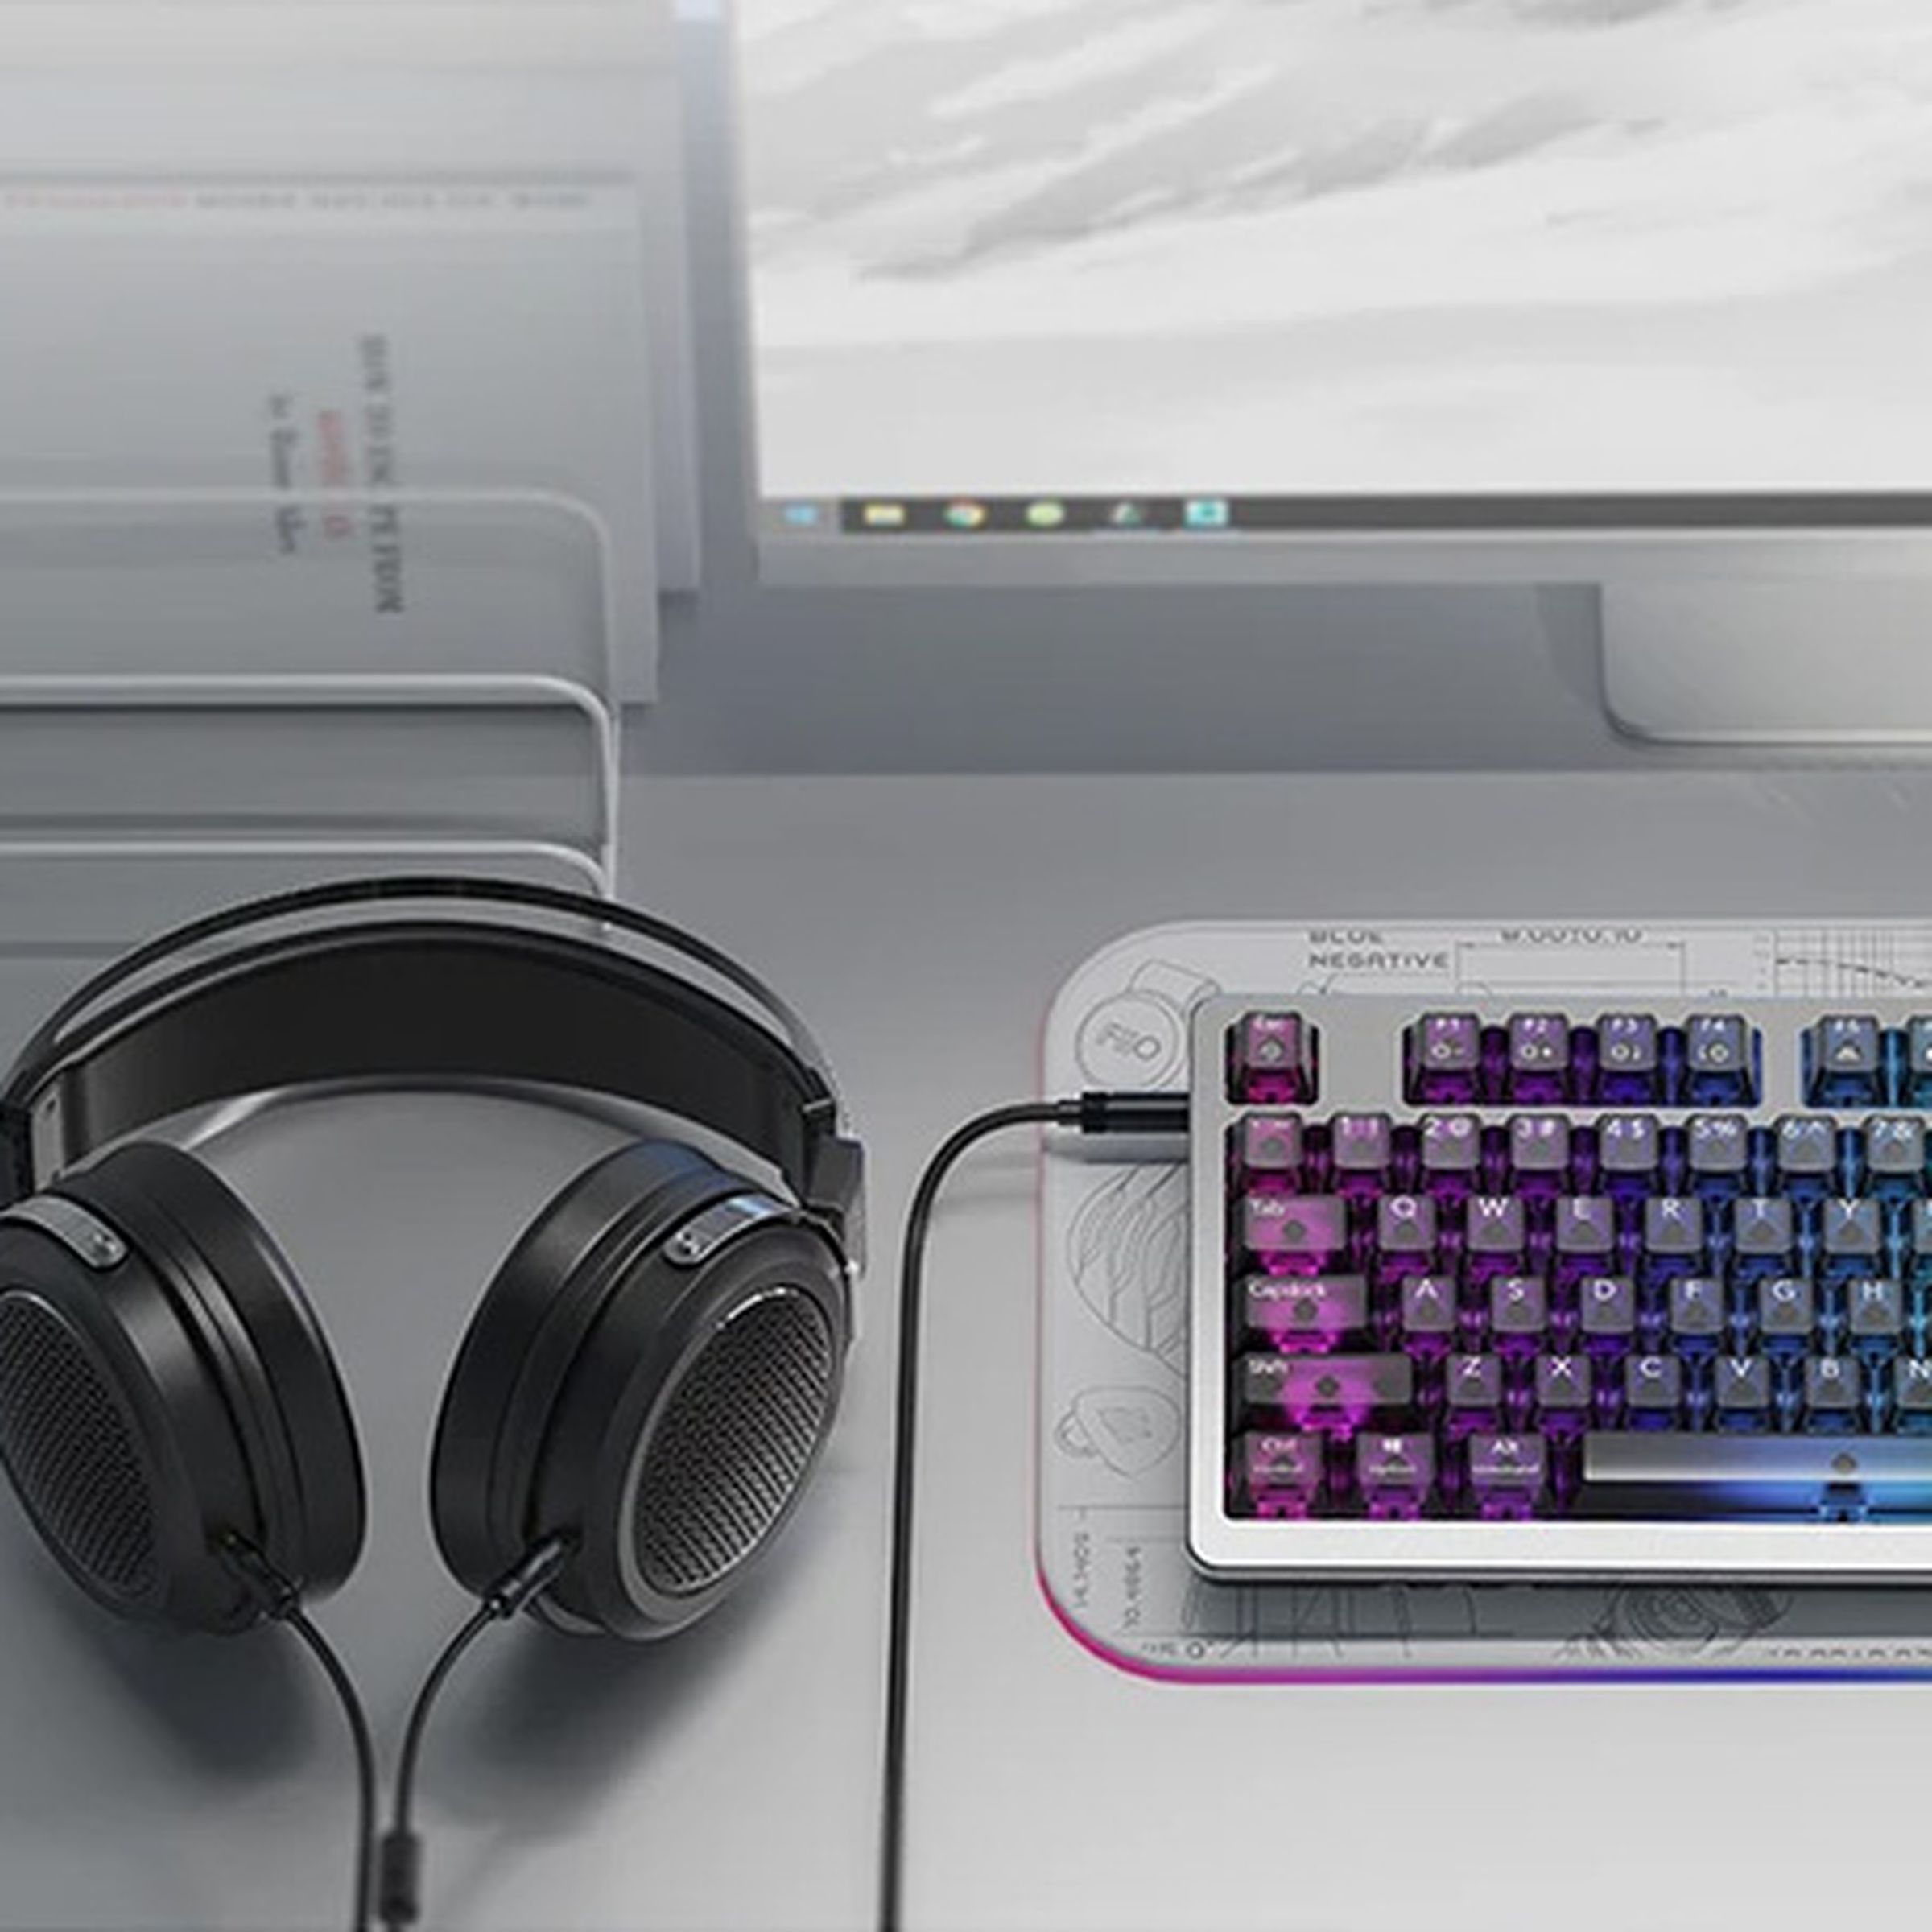 Headphones plugged into keyboard on desk.